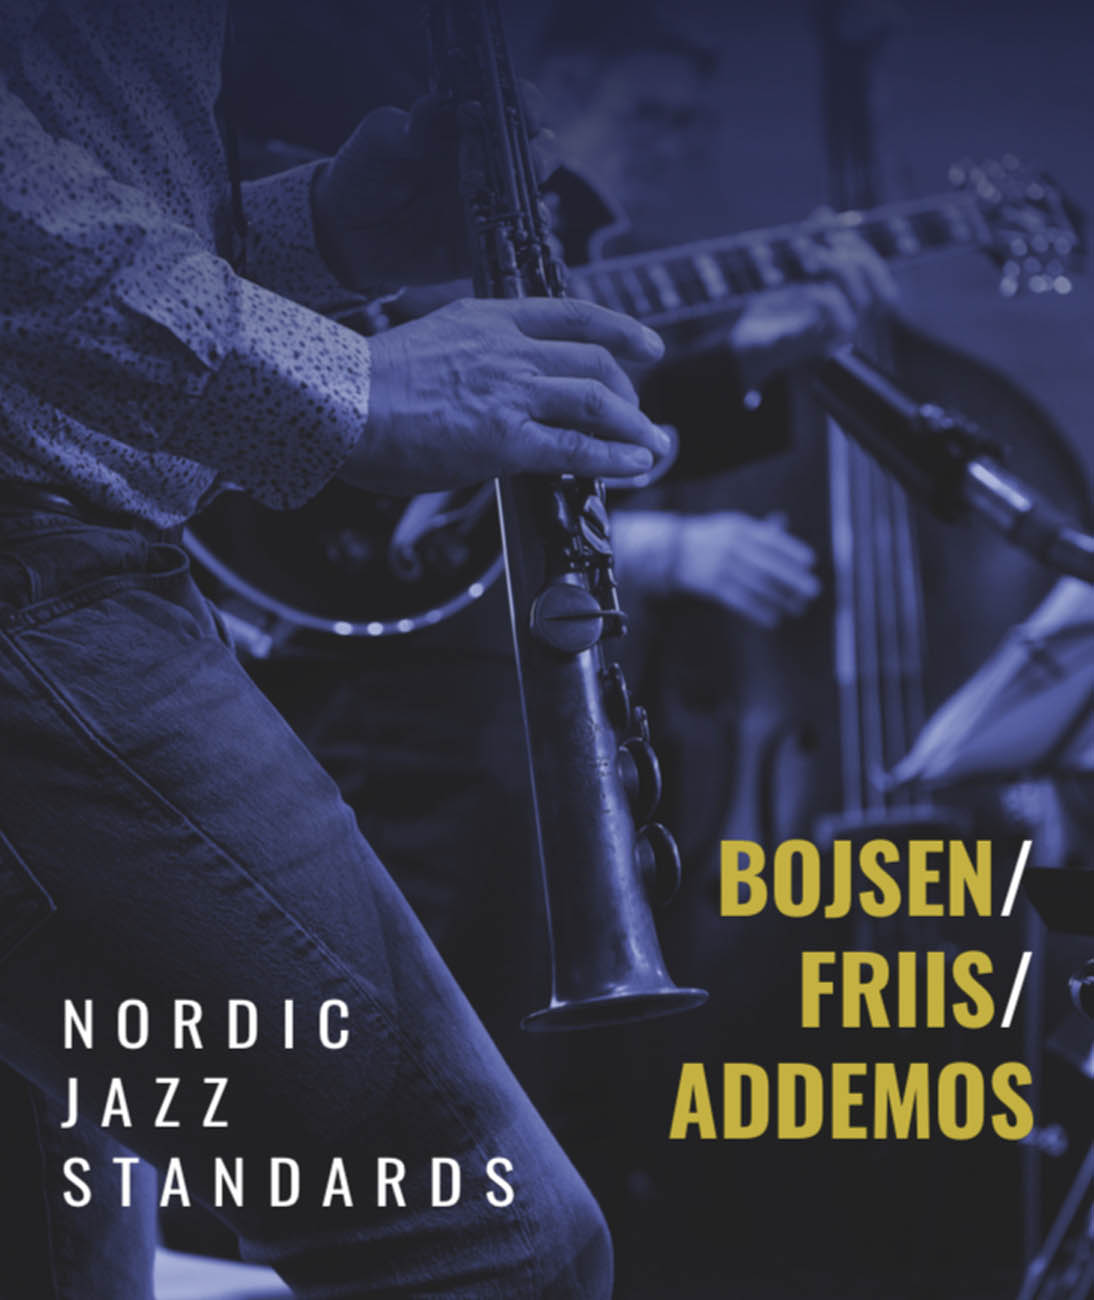 Bojsen / Friis / Addemos (DK) - Photo: VinDanmark